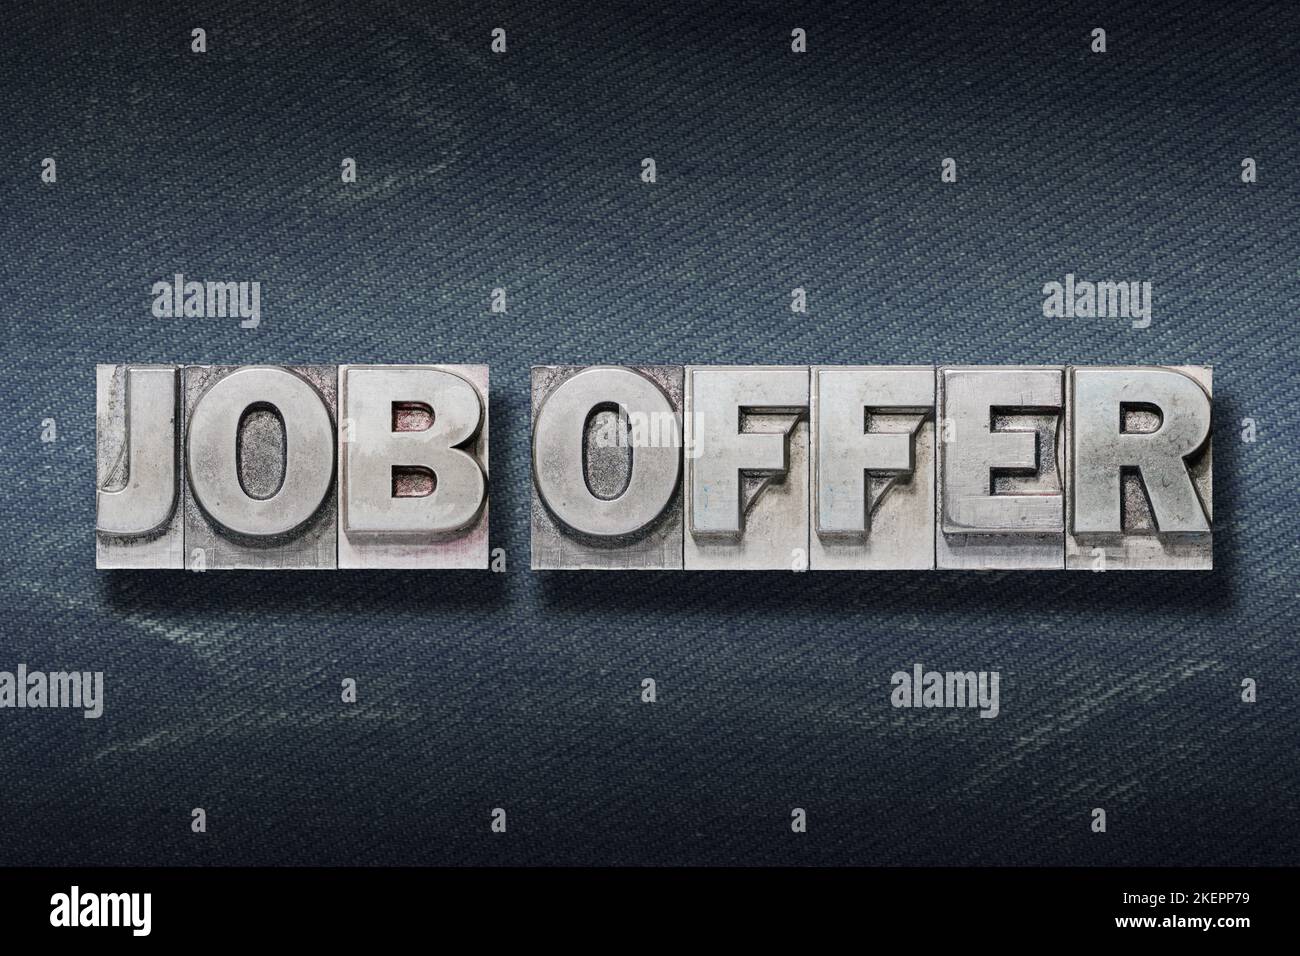 job offer phrase made from metallic letterpress on dark jeans background Stock Photo